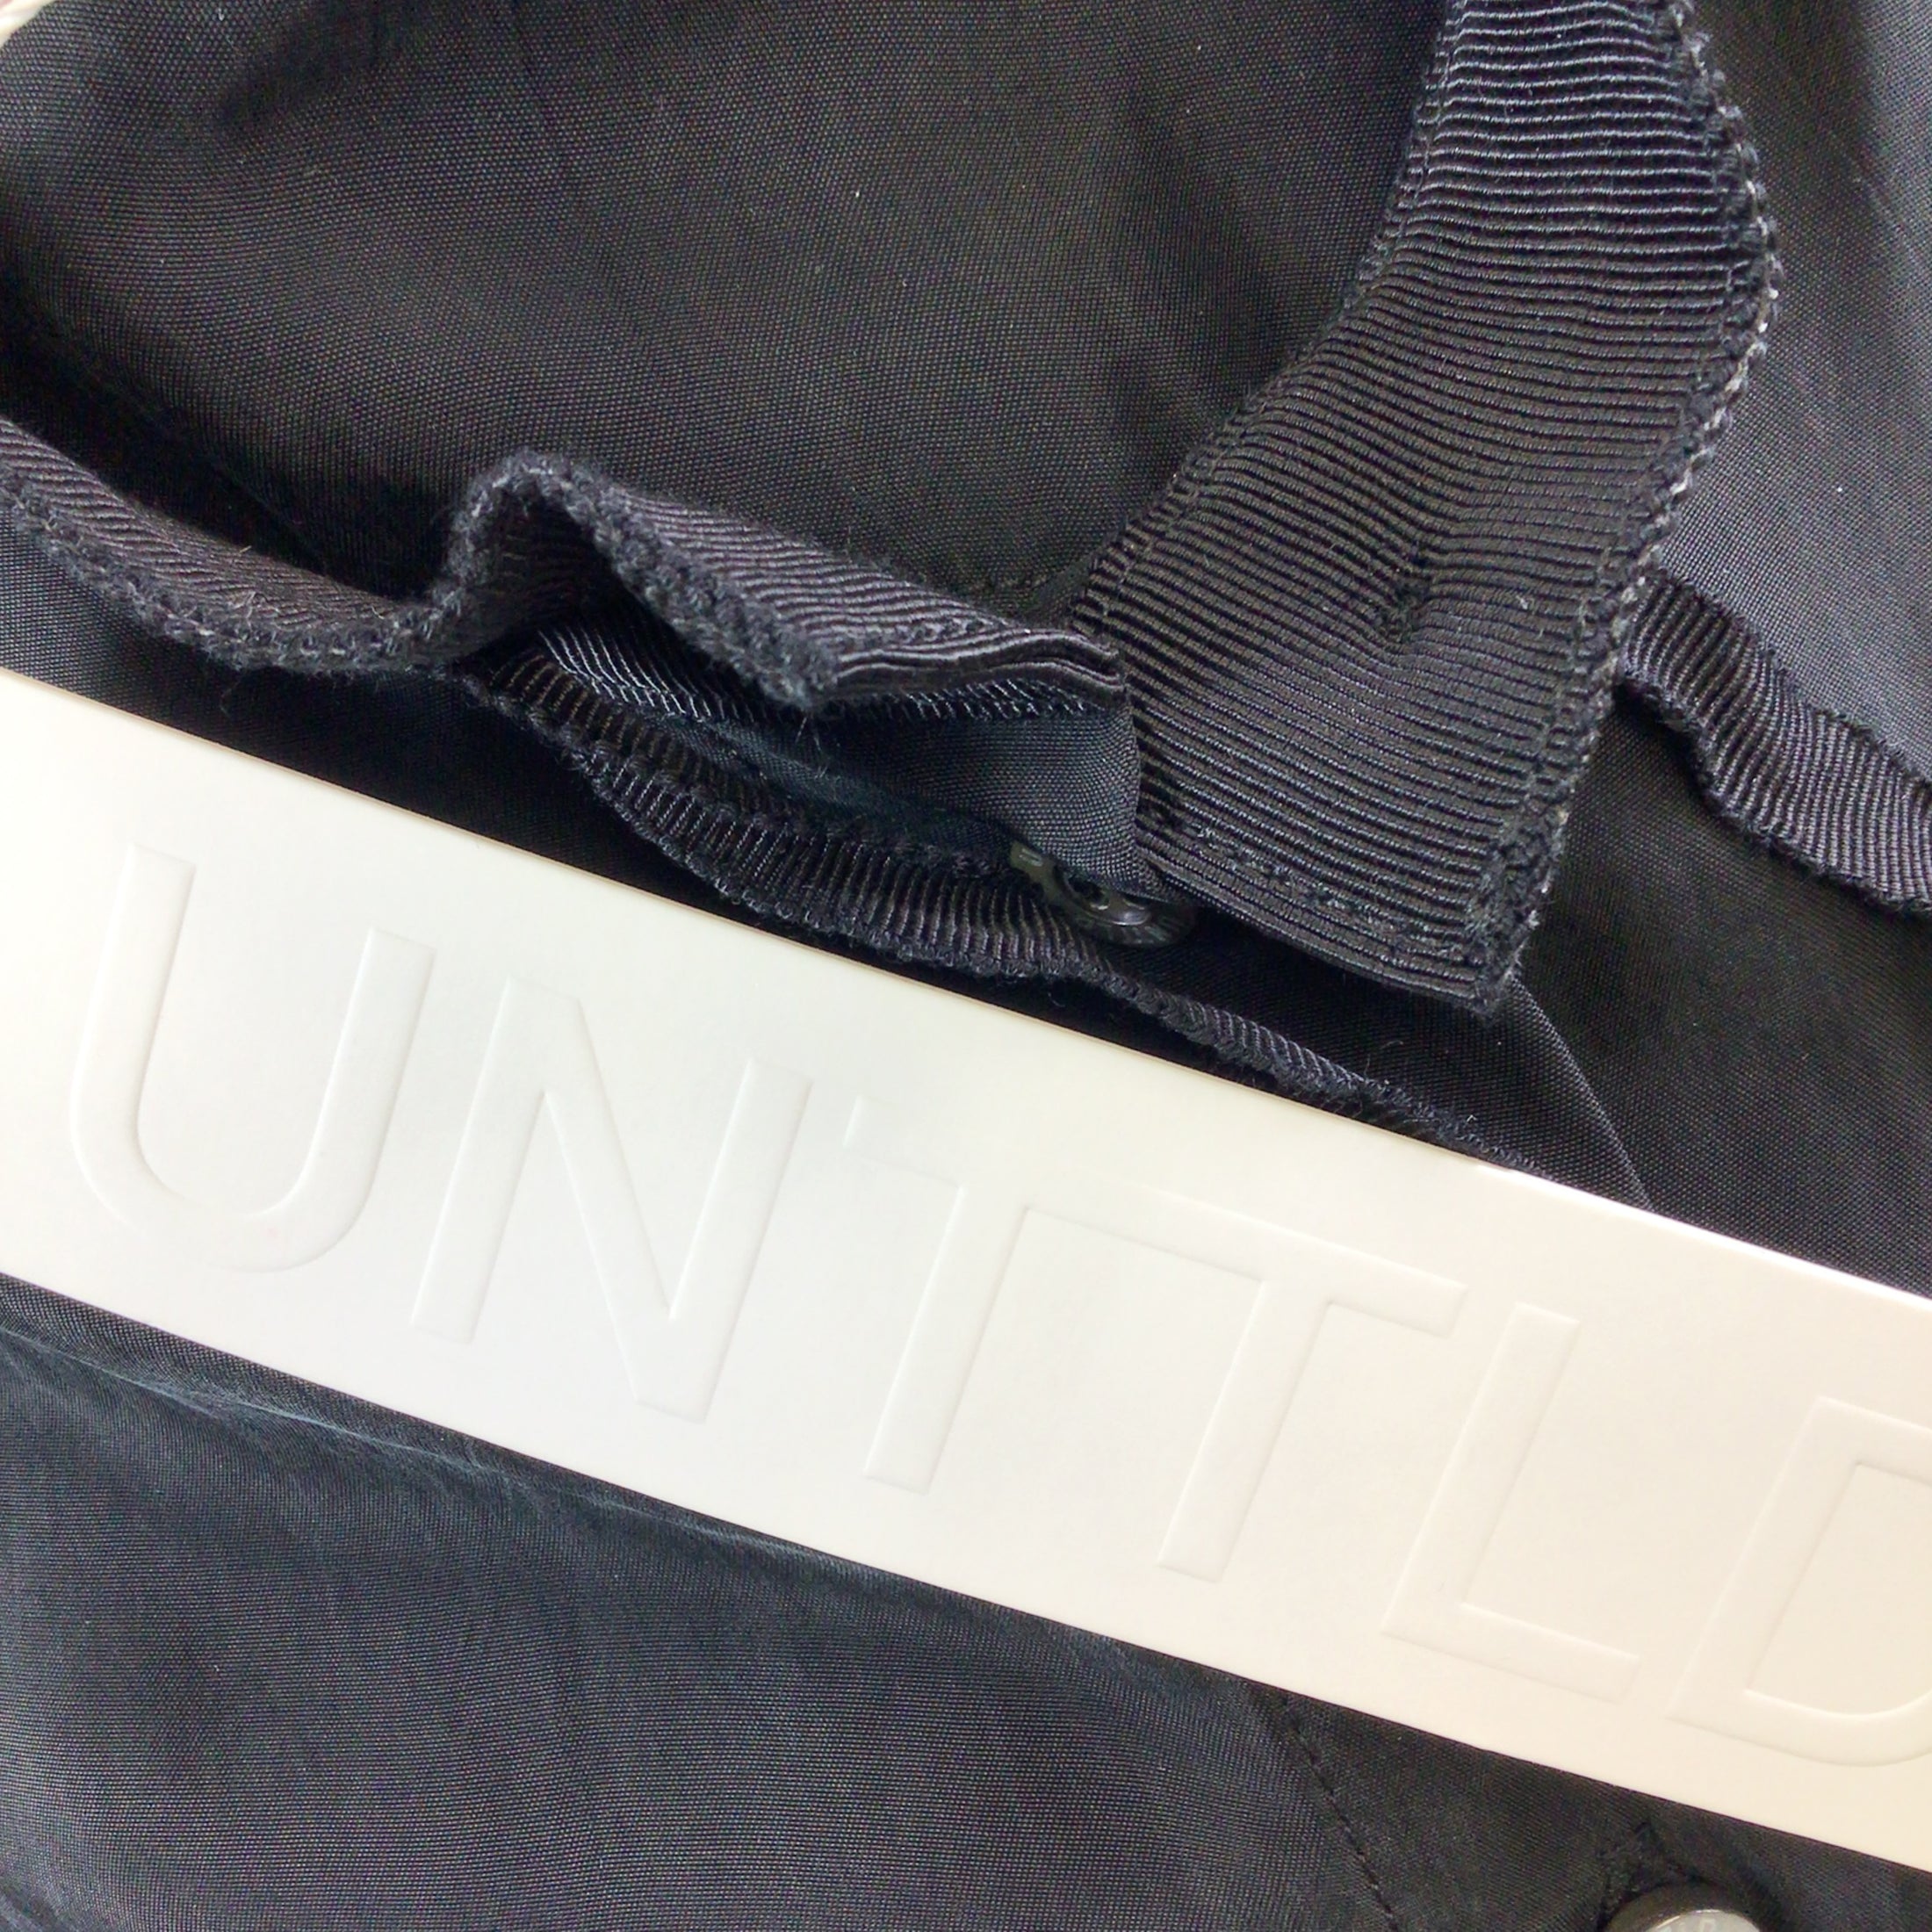 UNTTLD Black Sleeveless Button-Front Asymmetric Hem Midi Dress